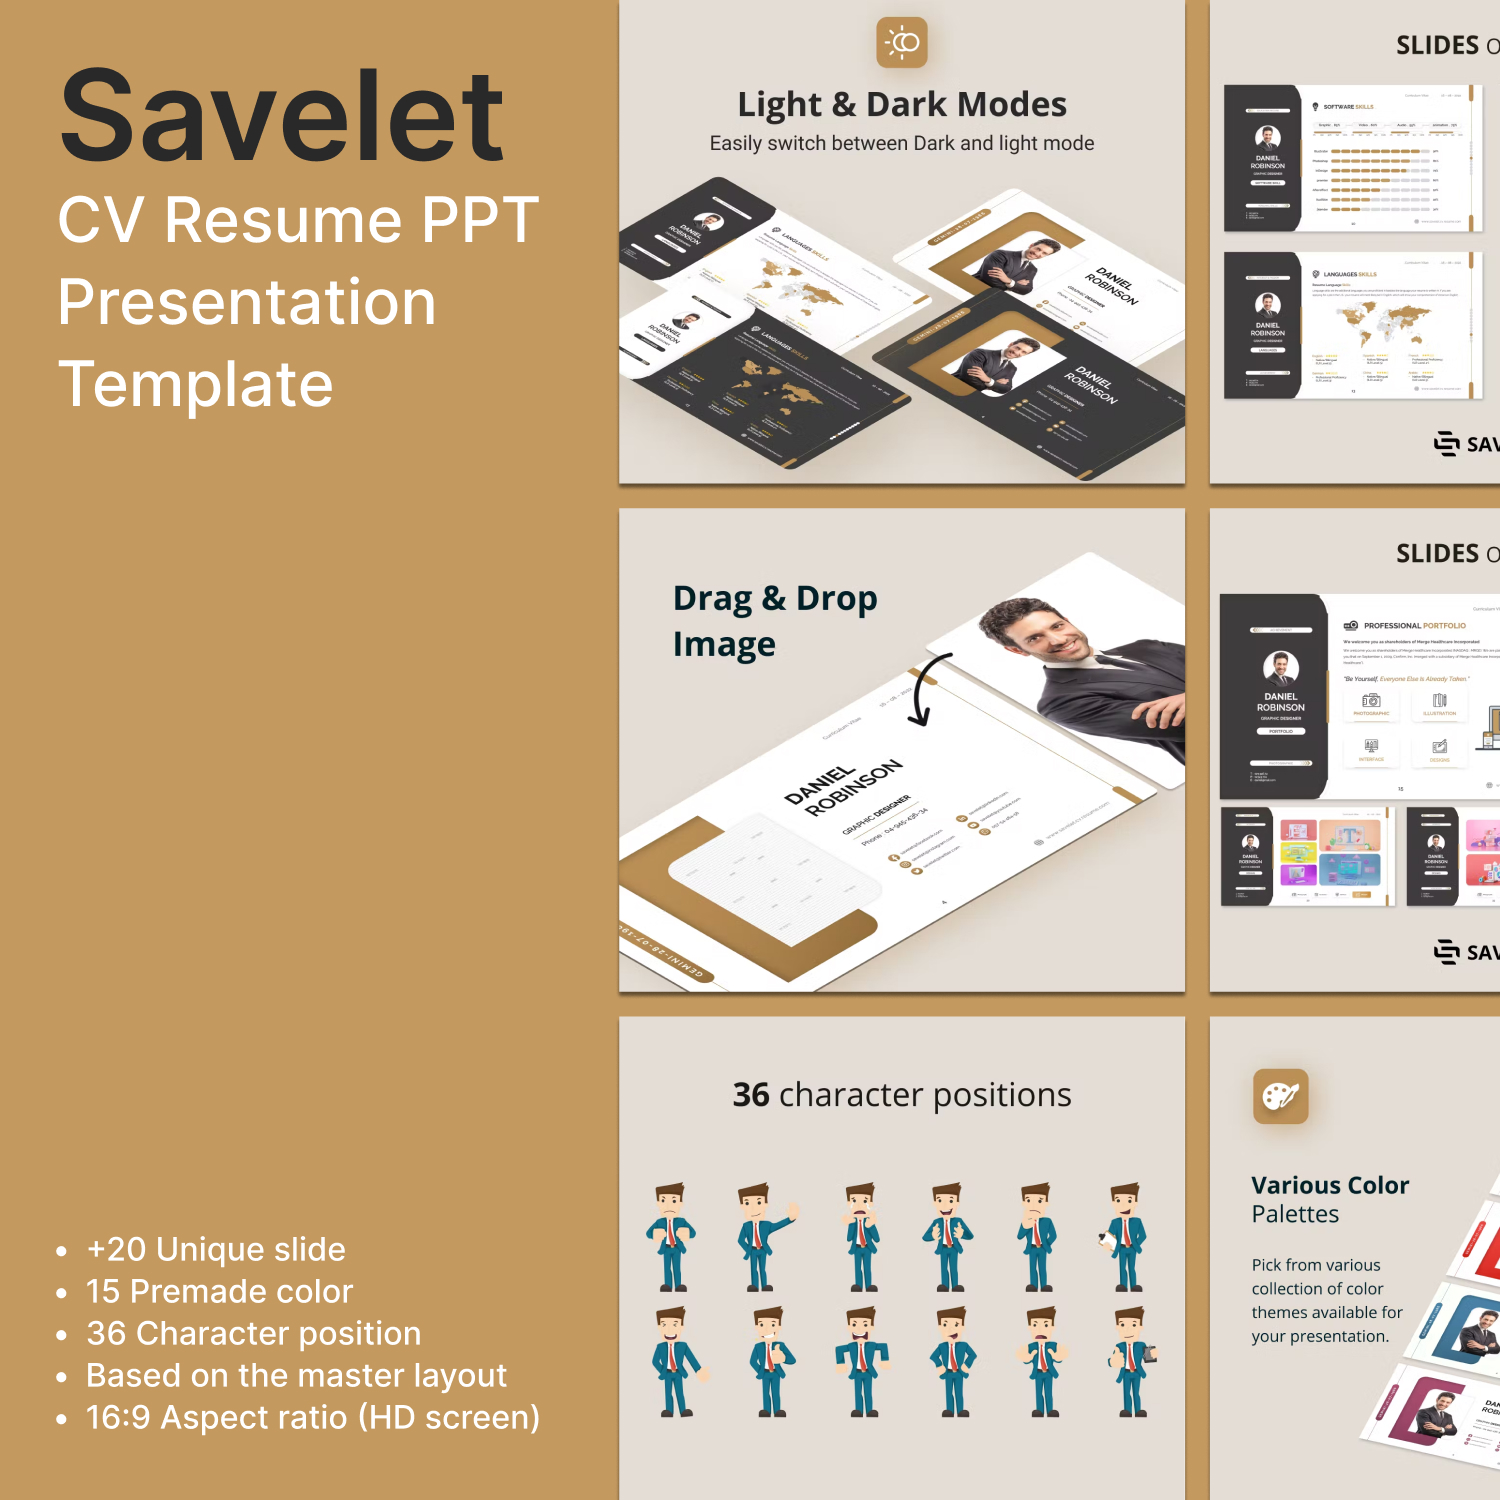 Prints of savelet – cv resume ppt presentation template.